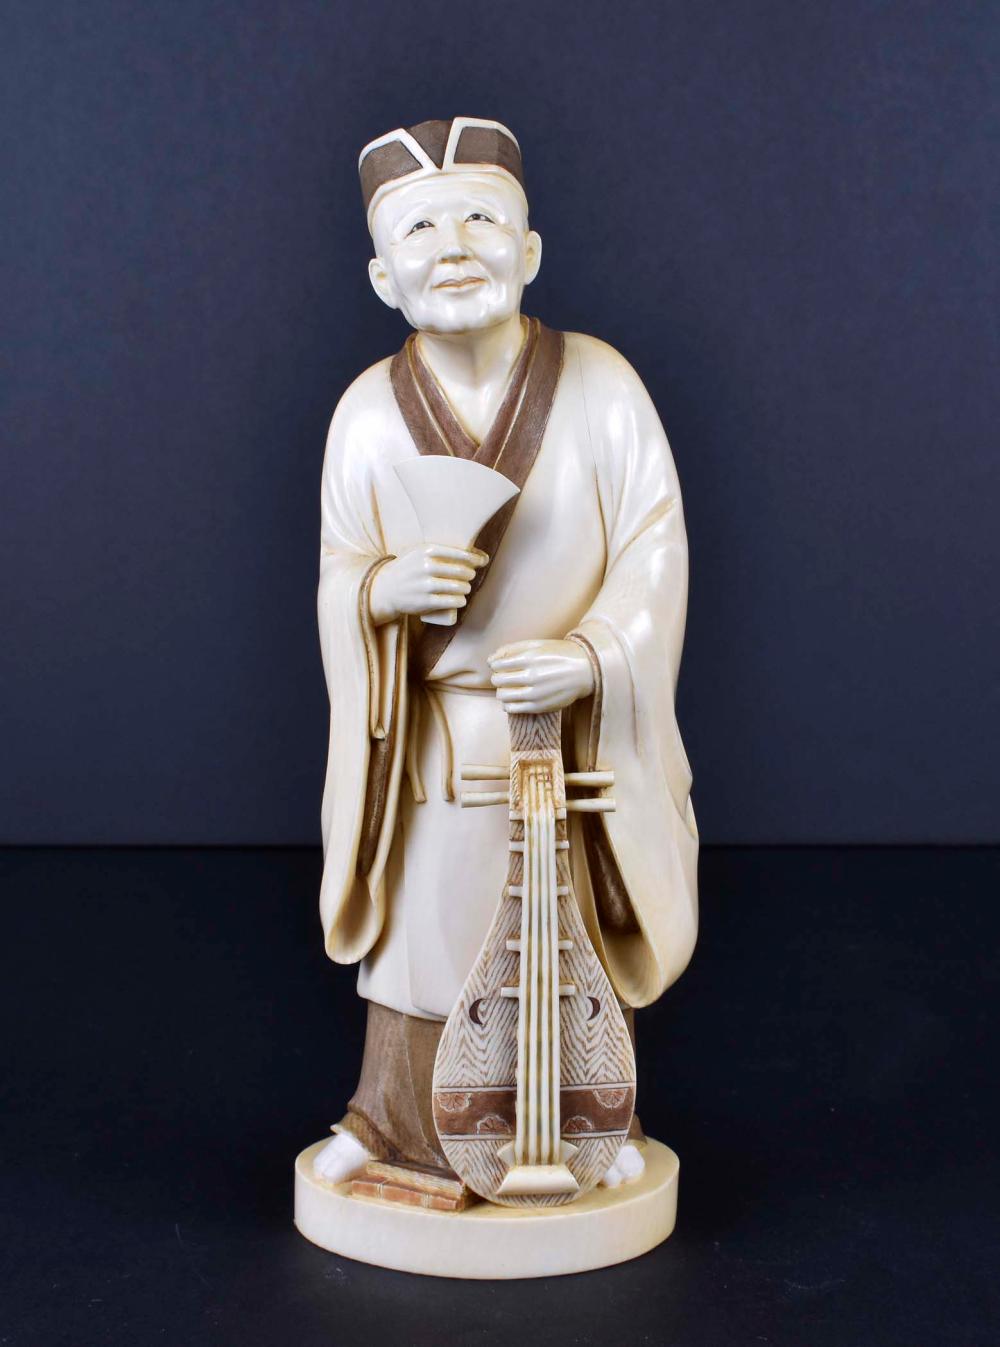 JAPANESE OKIMONO OF A MUSICIANMeiji